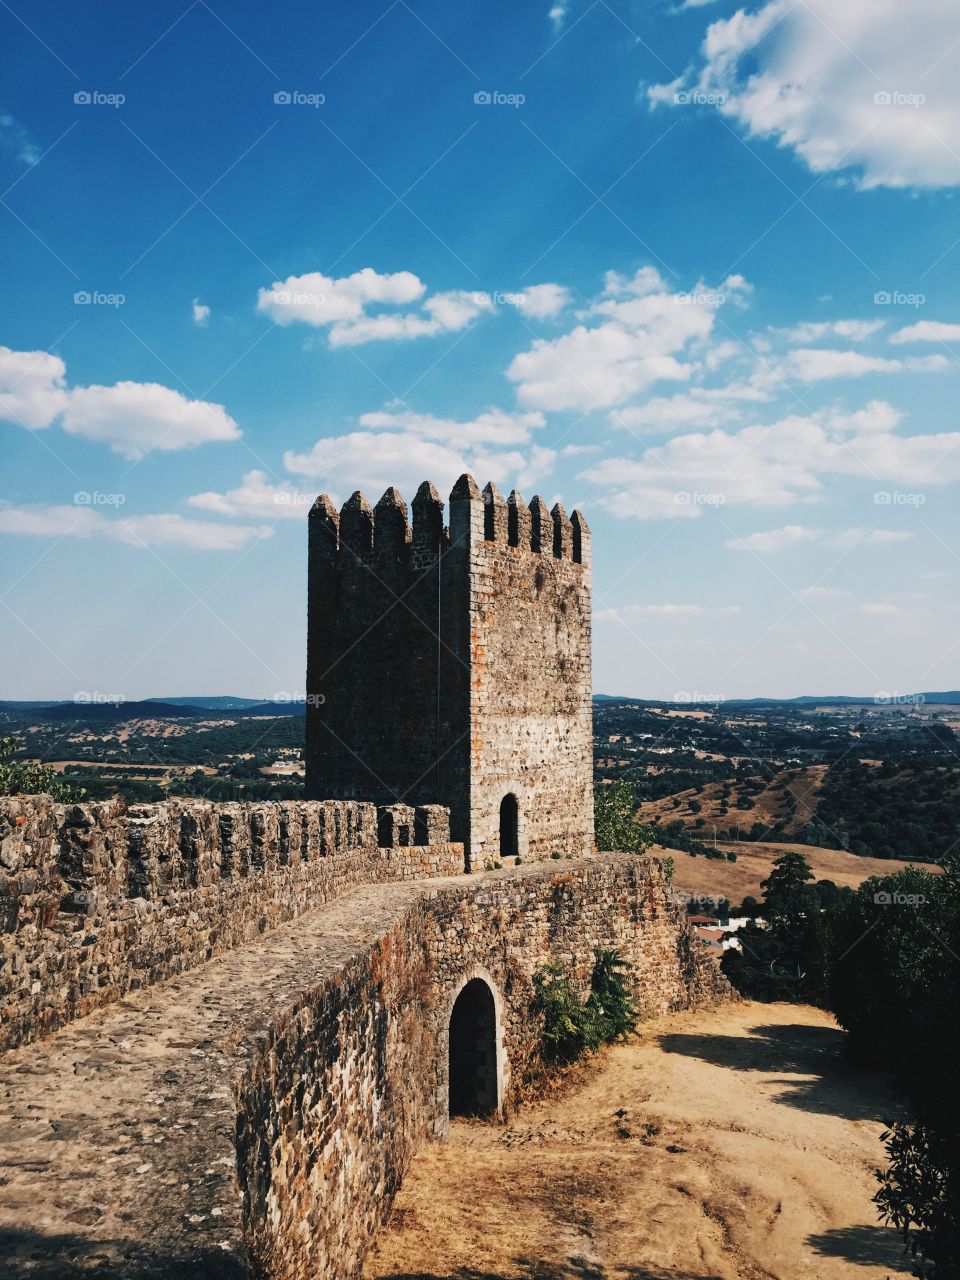 Tower of medieval castle in Montemor-o-Novo, Portugal 